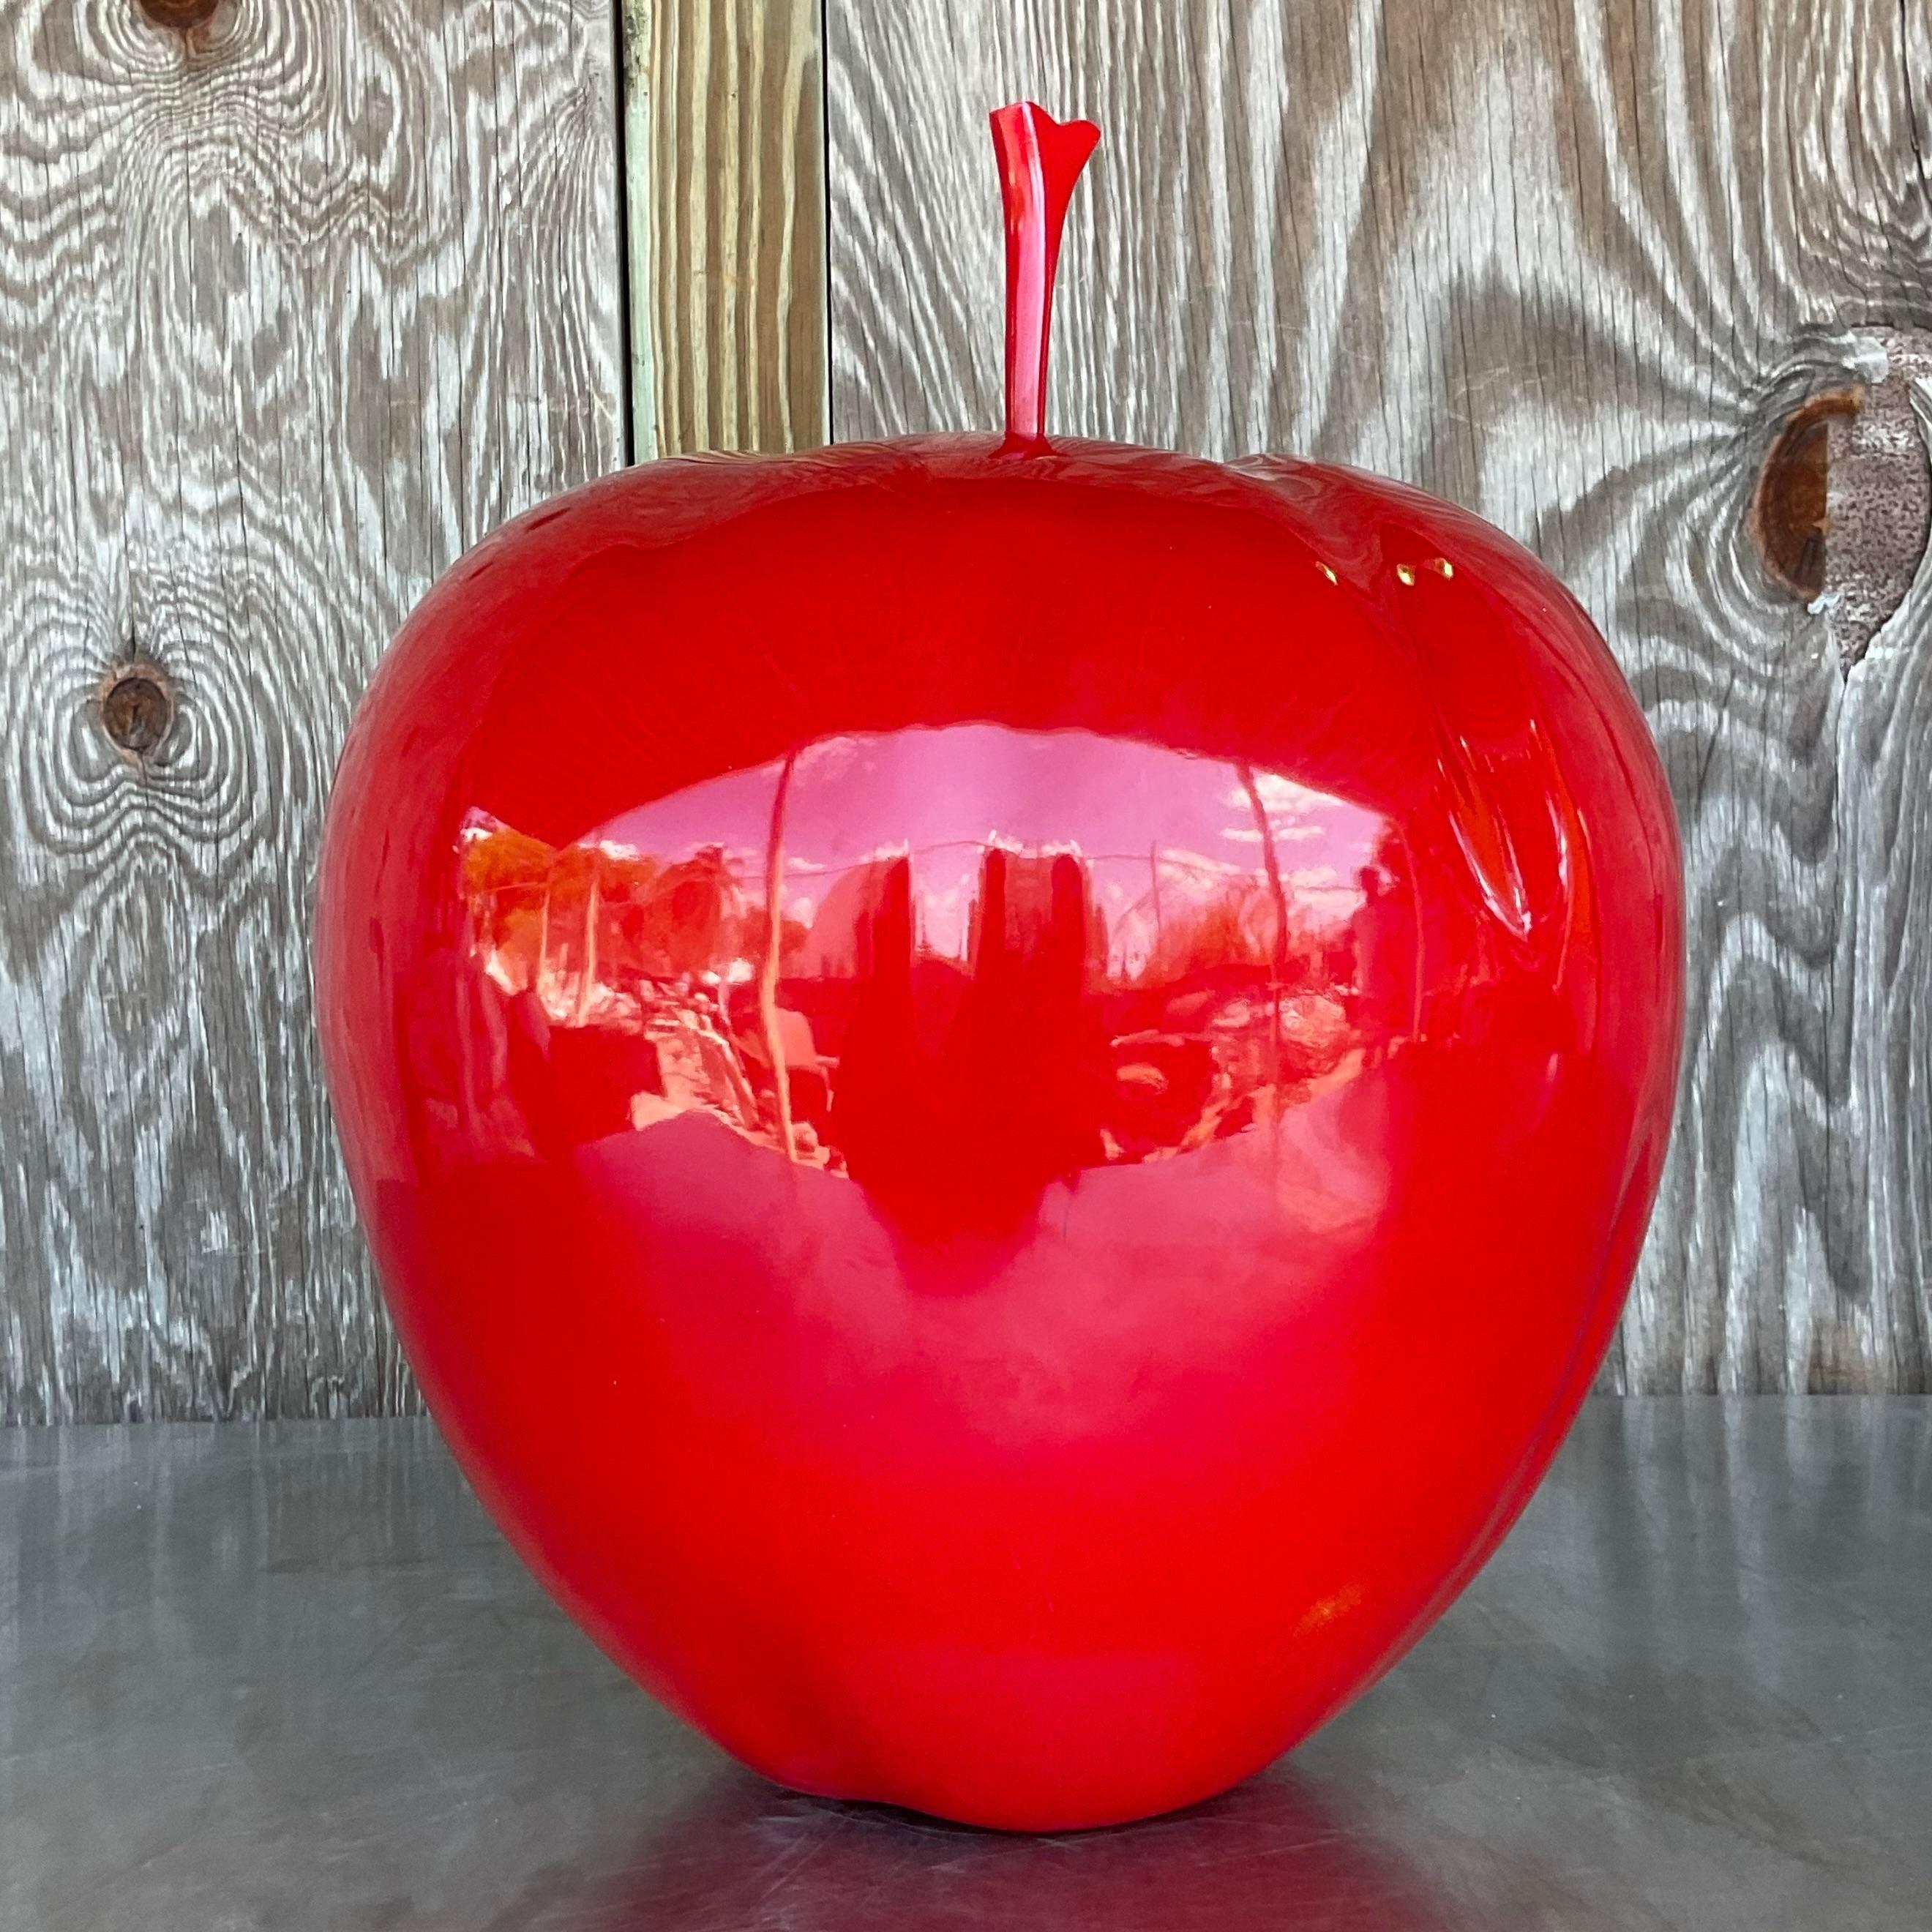 Monumentaler Apfel im Vintage-Stil der Postmoderne (20. Jahrhundert) im Angebot